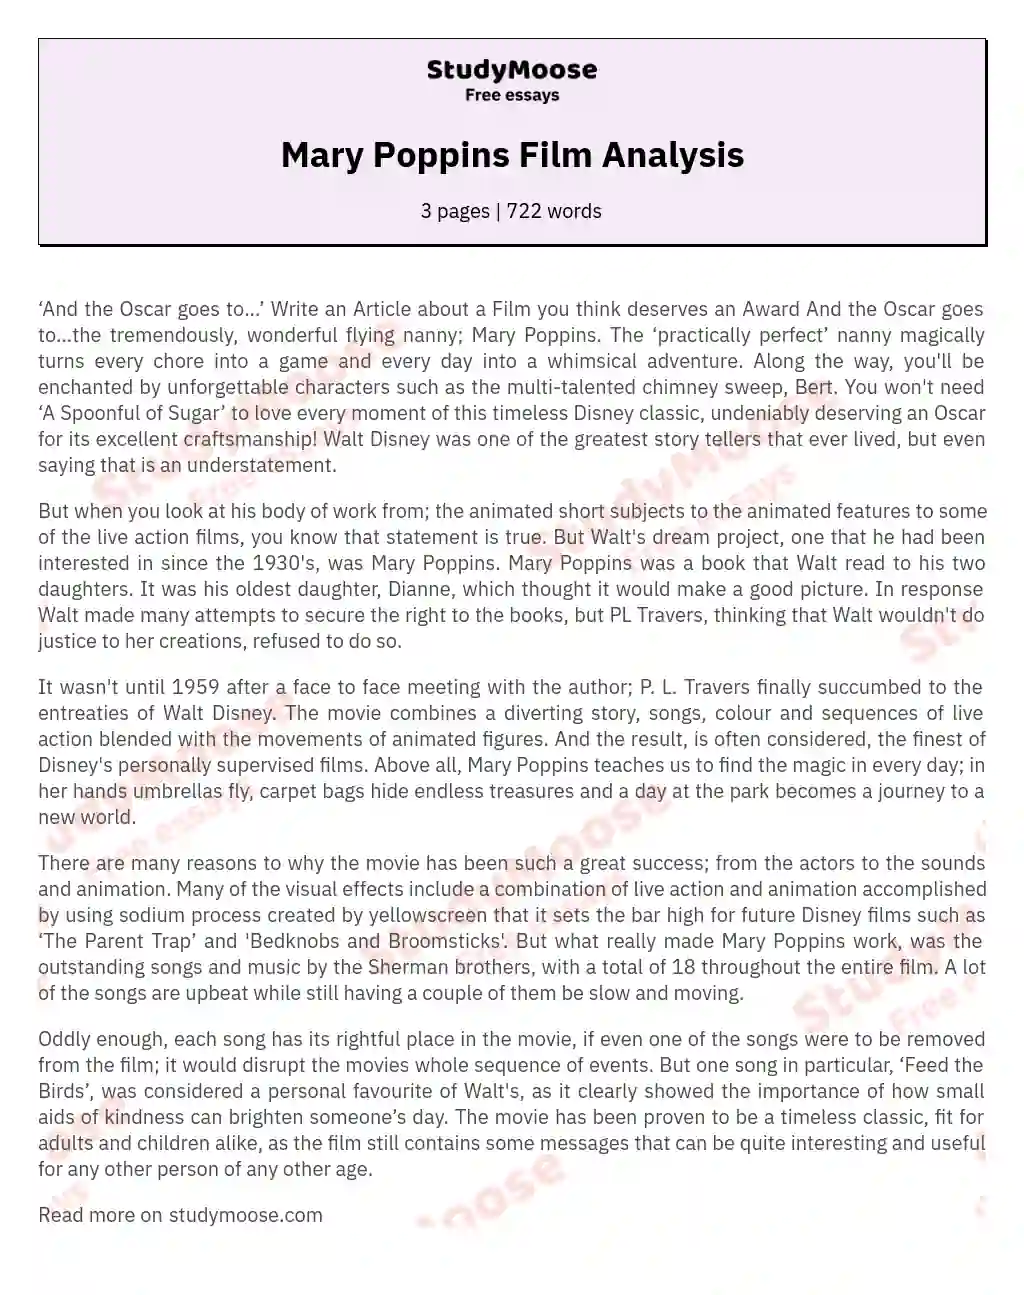 Mary Poppins Film Analysis essay